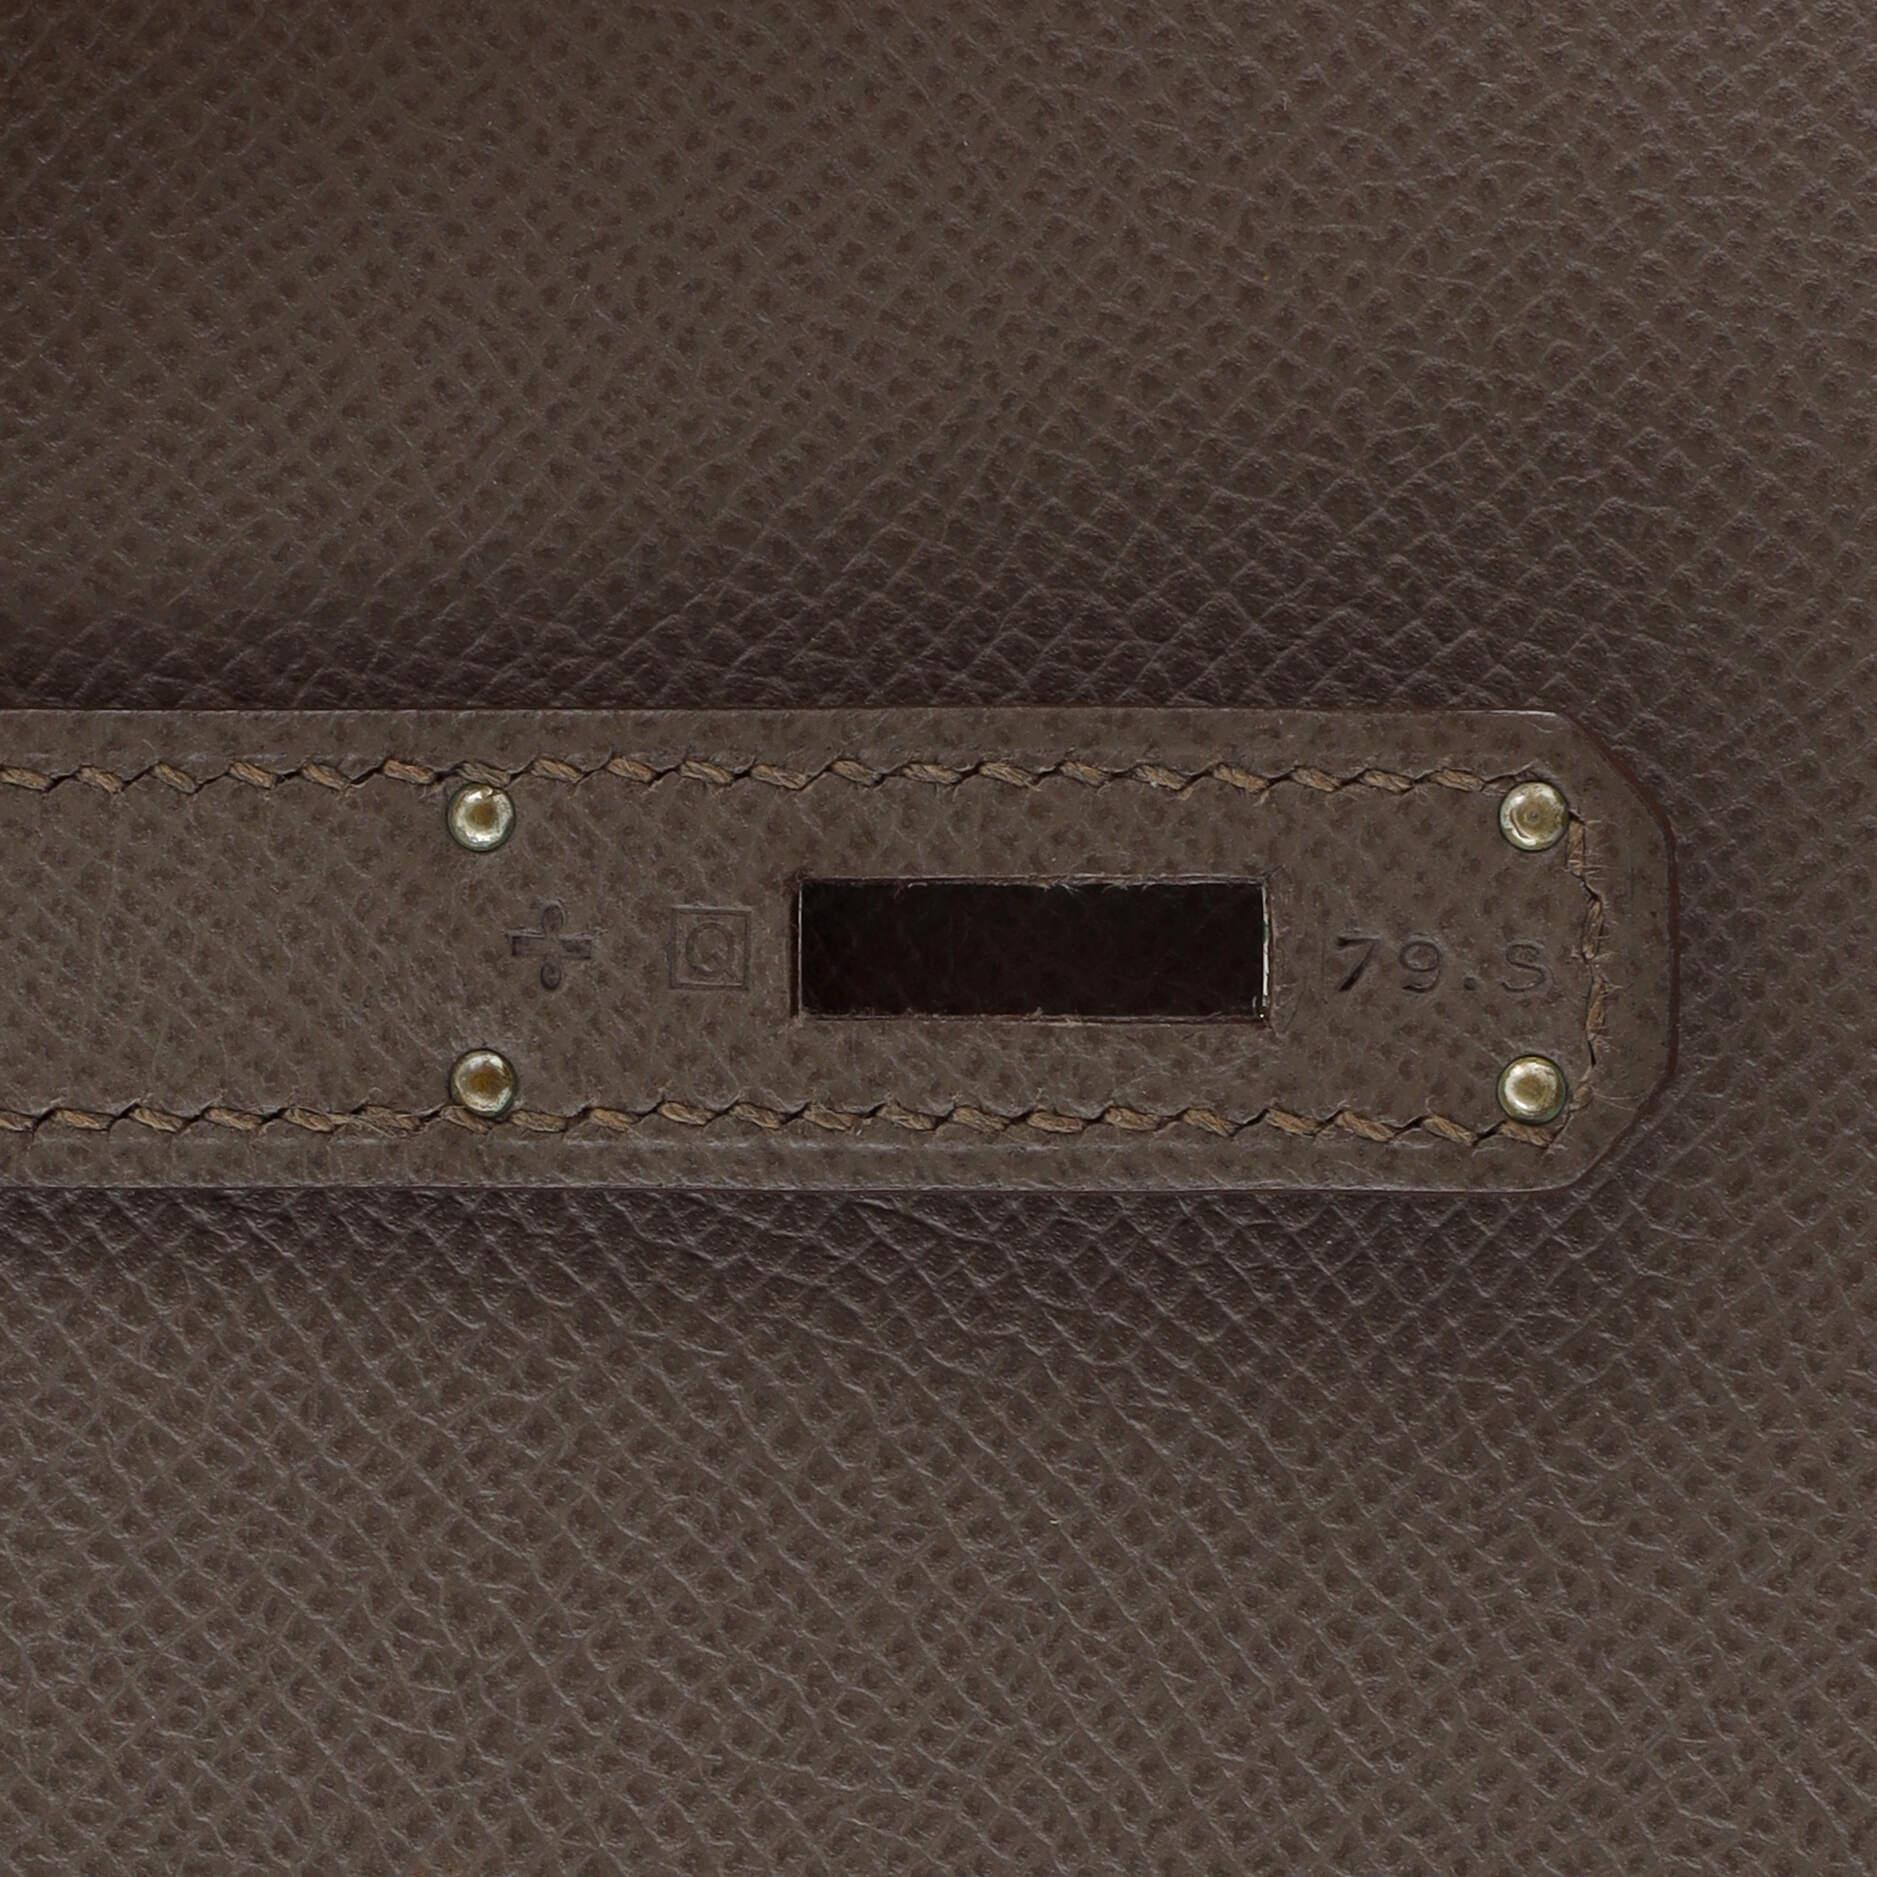 Hermes Kelly Handbag Grey Epsom with Palladium Hardware 35 5